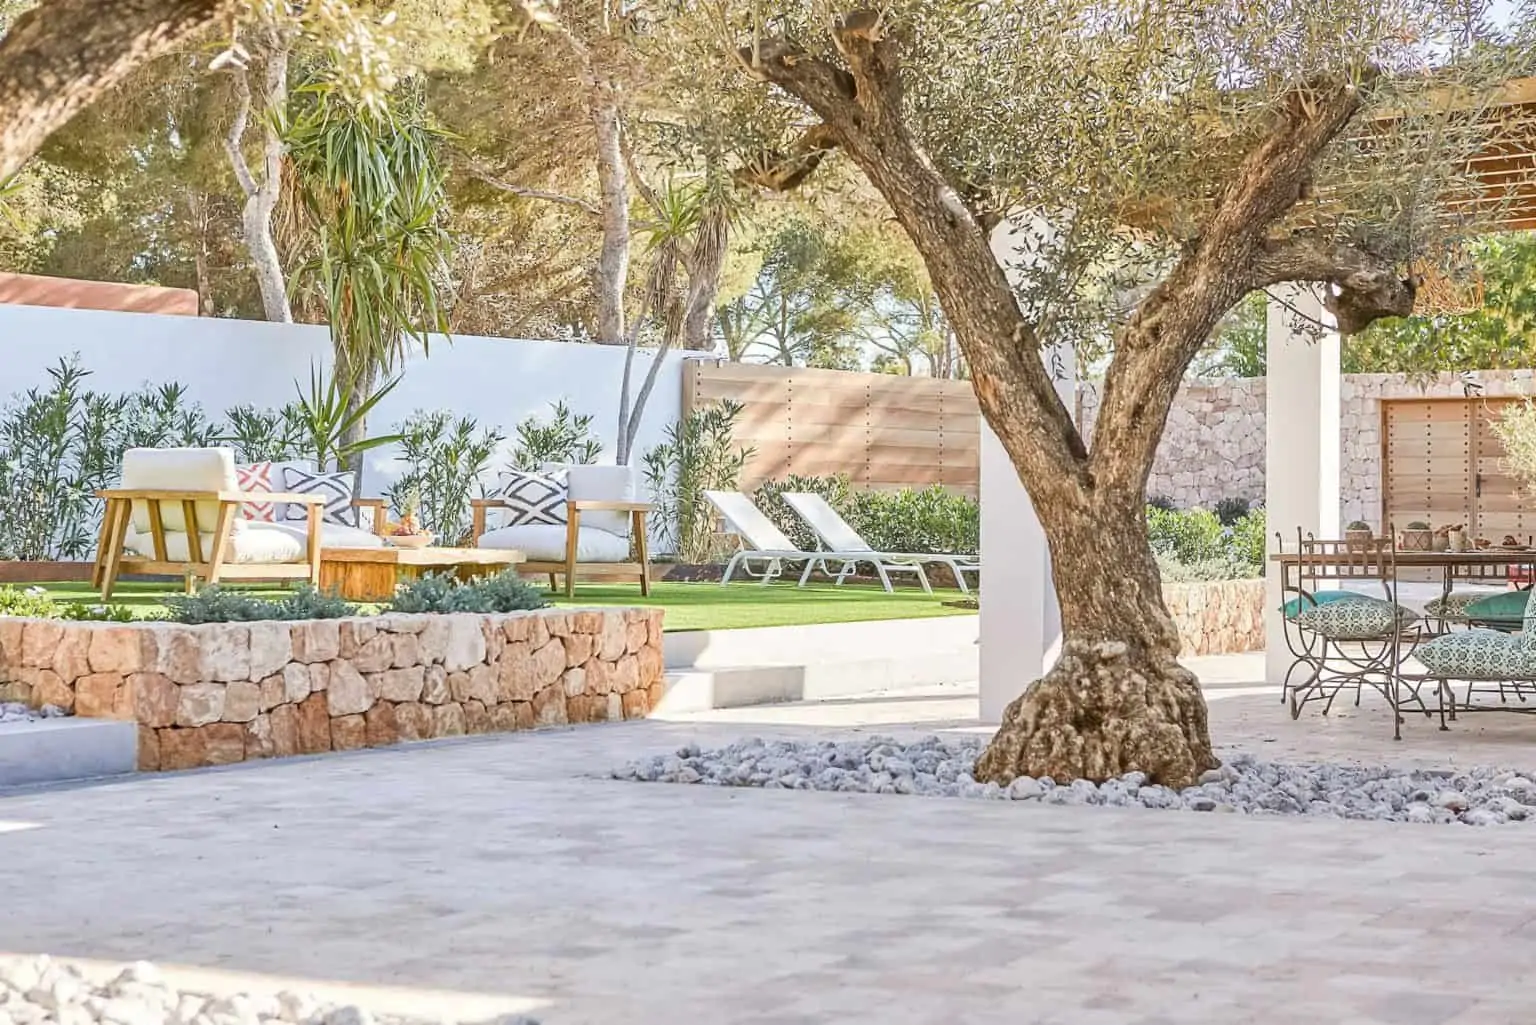 Villa Zoe rental in ibiza with 5 bedrooms, Balearic Bliss (3)